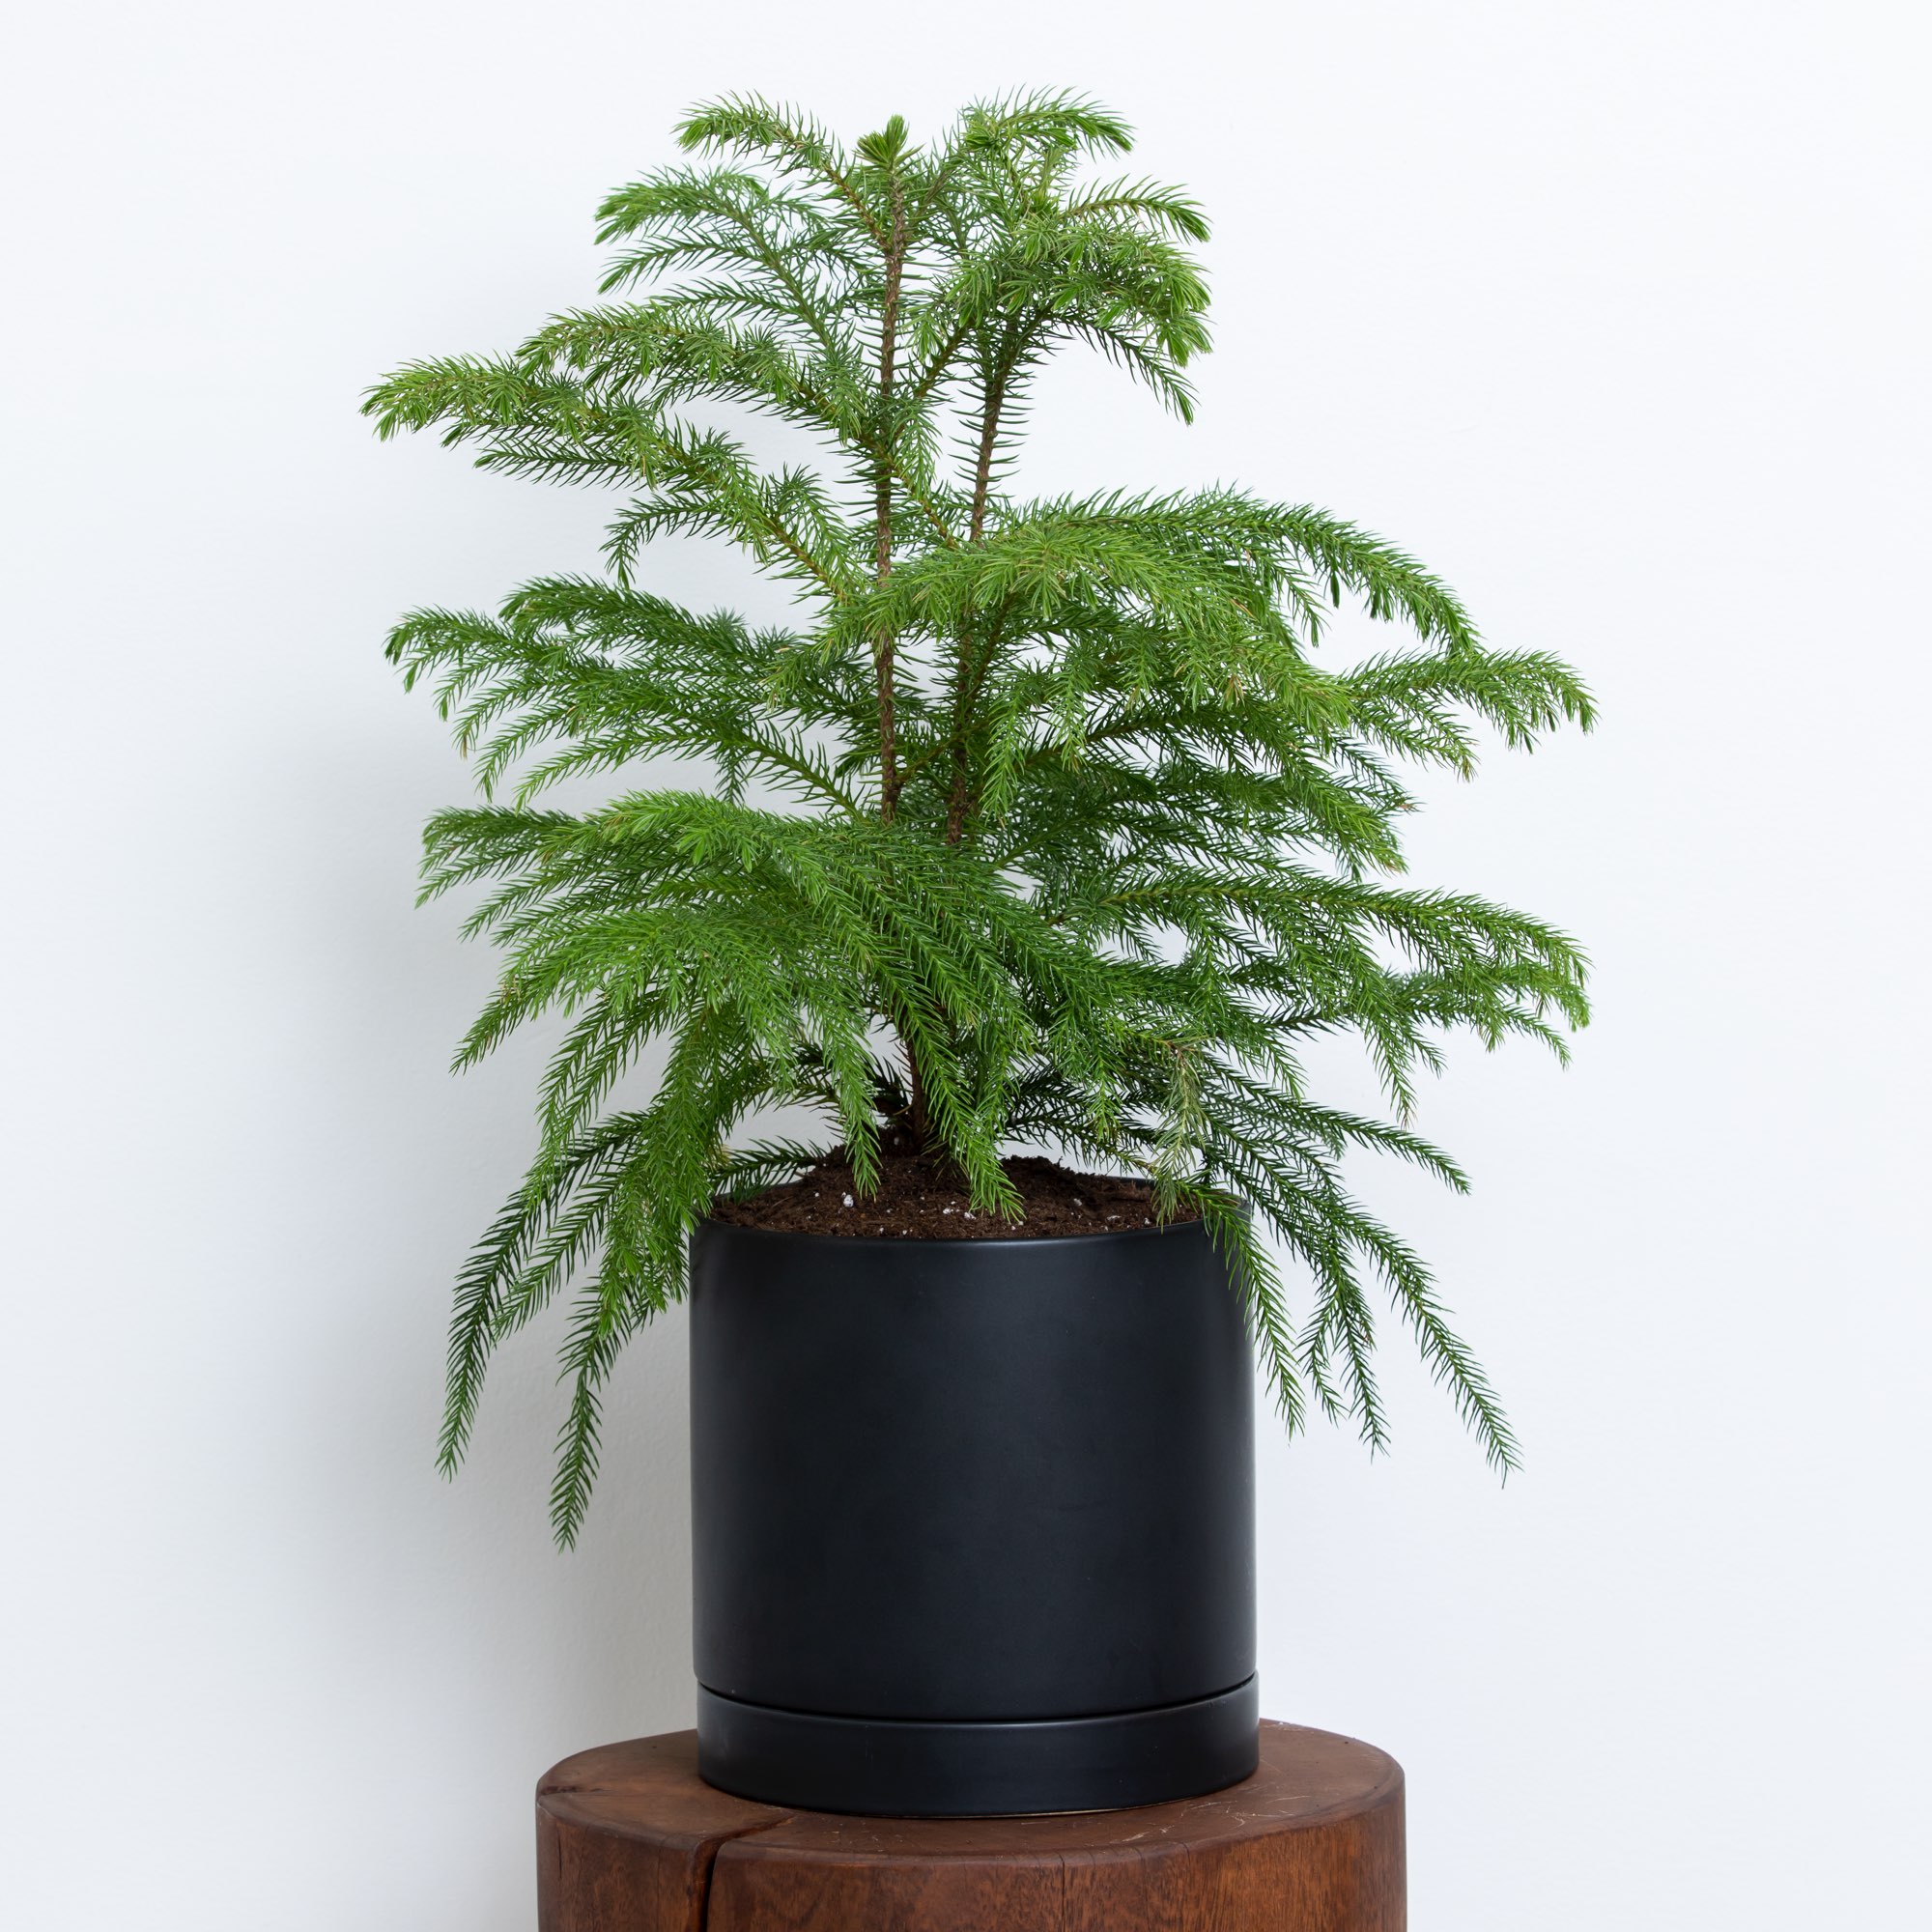 Greendigs Norfolk Island Pine Plant